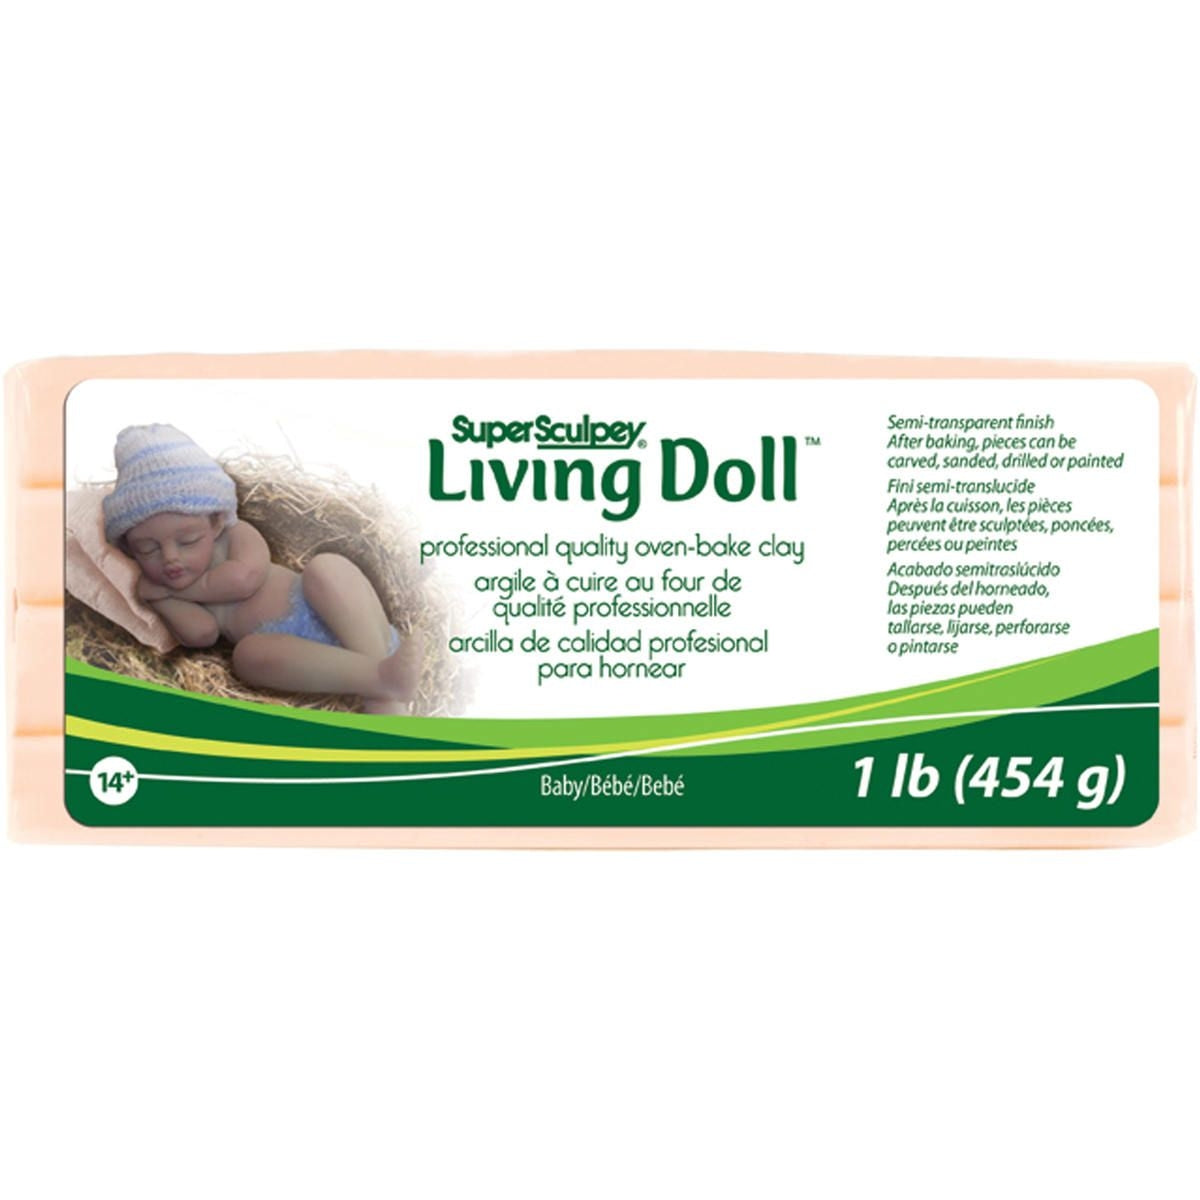 Super Sculpey Living Doll - Baby 1lb